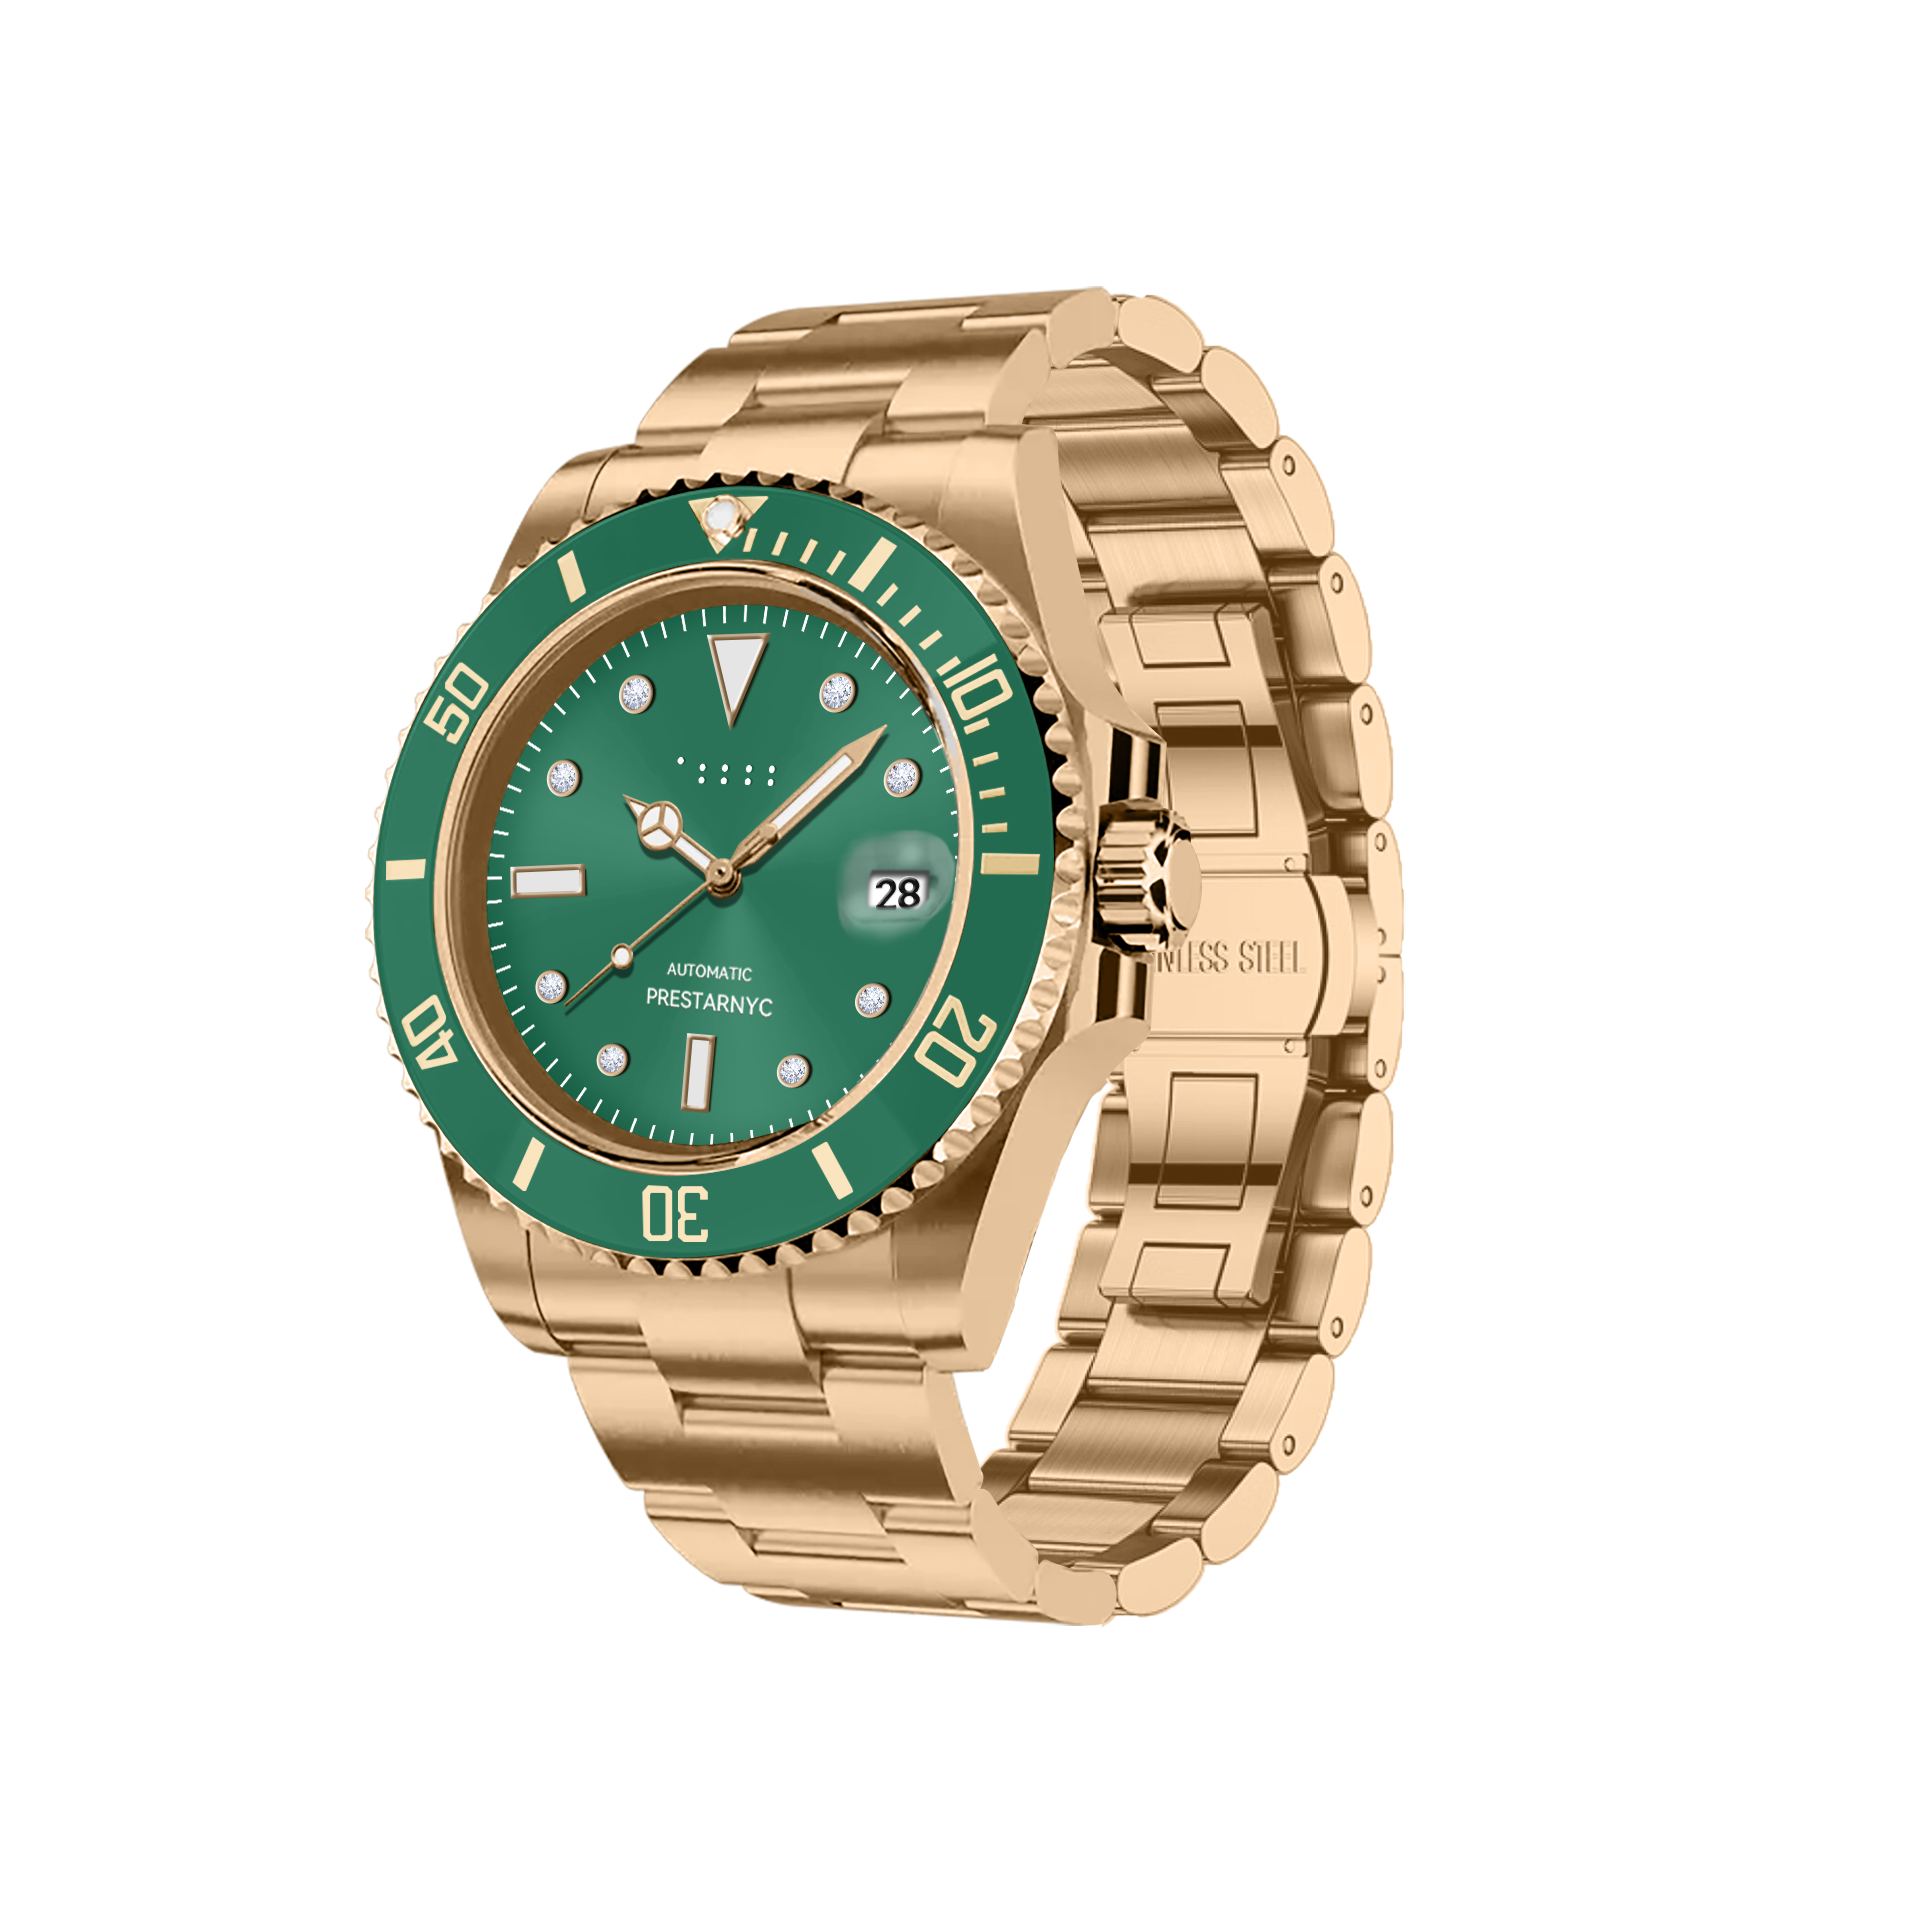 Prestar NYC Aquaman Classic Diamond Gold Watch (Forest Green)